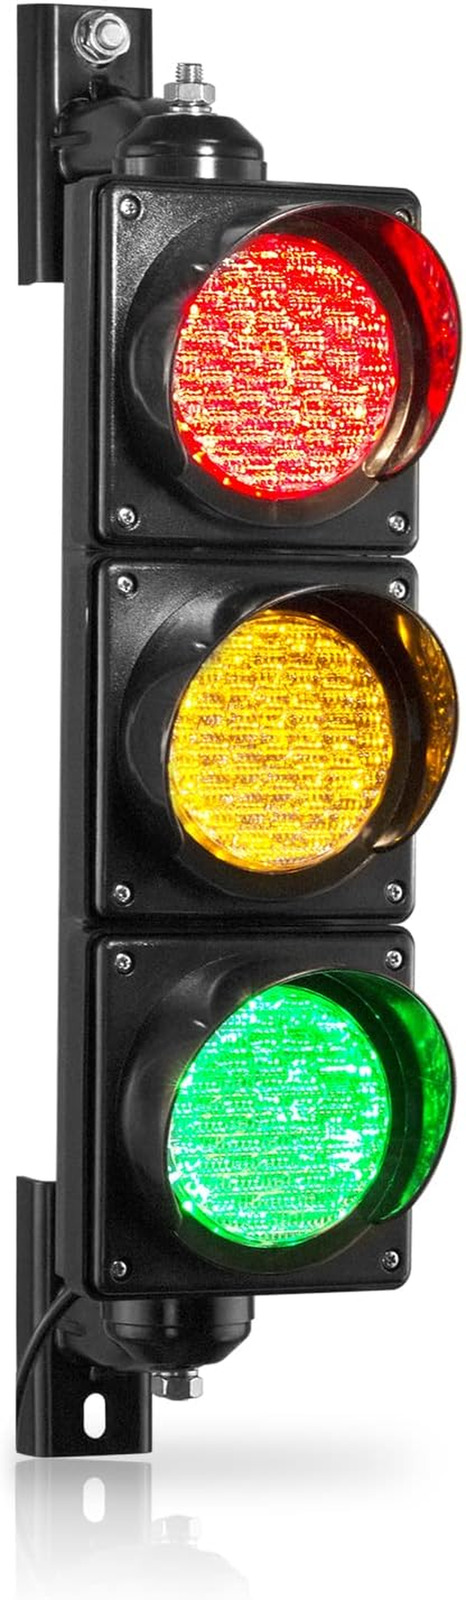 AC85-265V(4 Inch) Traffic Light, Red Yellow Green Traffic Signal Light, PC